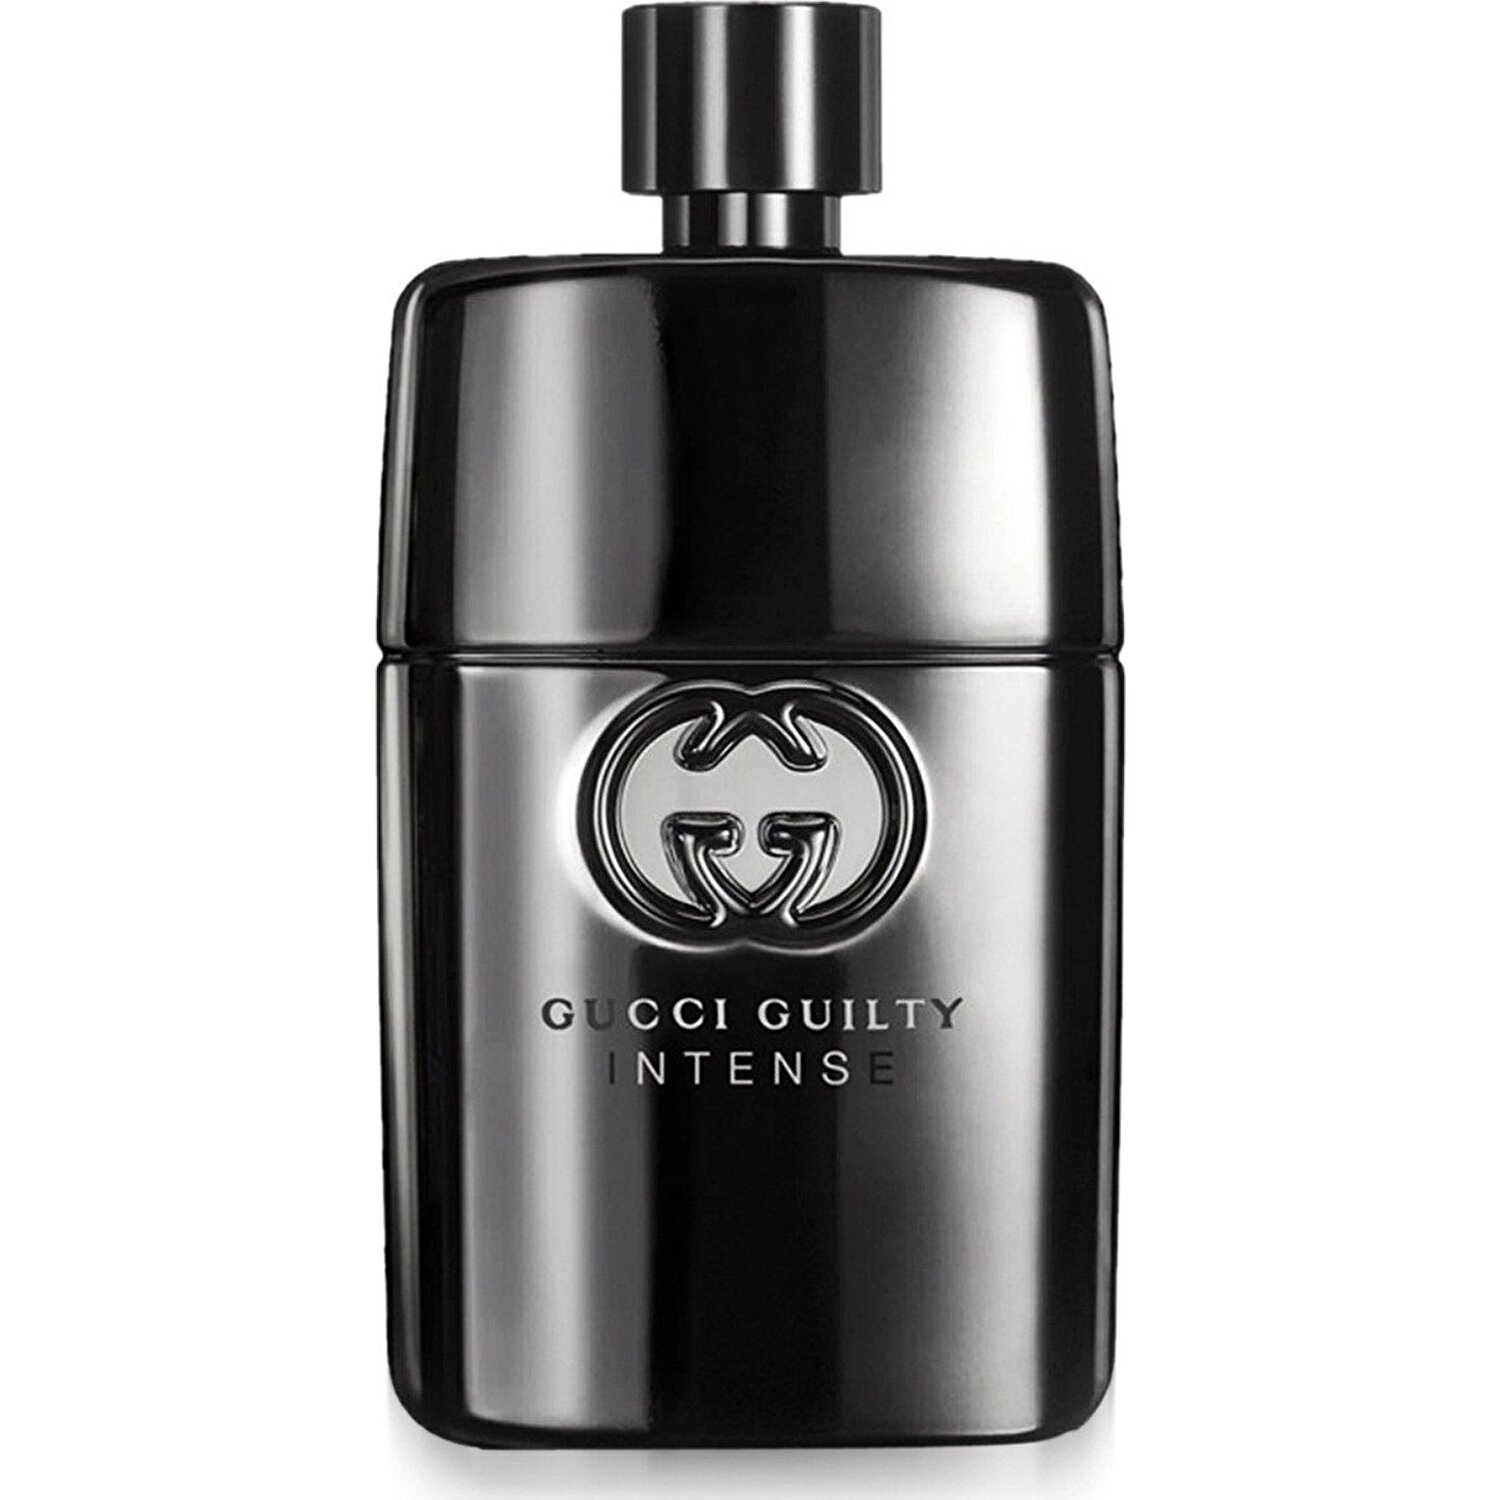 Gucci Guilty Intense Edt 90 Ml Erkek Parfum Fiyati